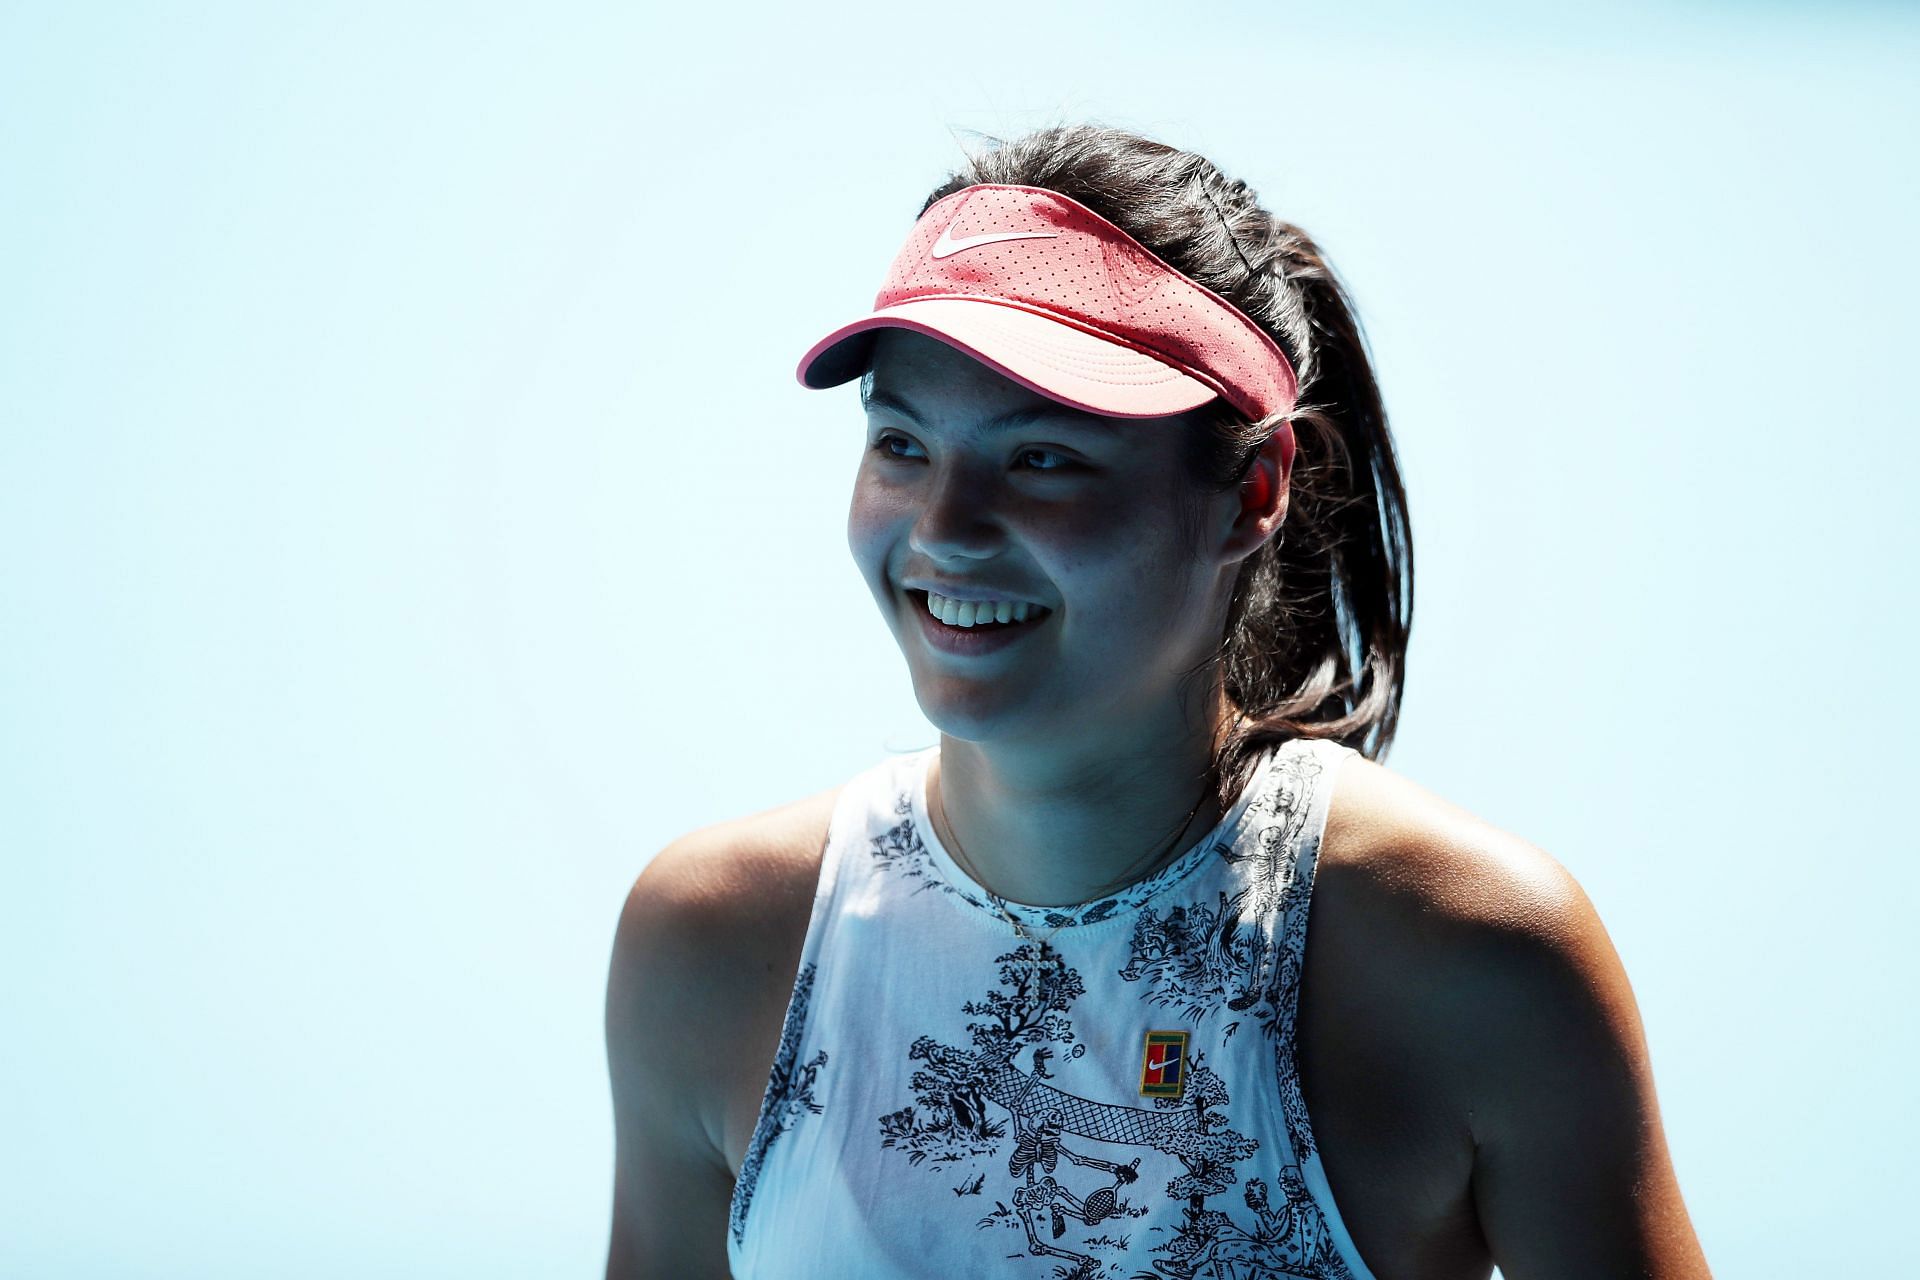 Emma Raducanu practicing in Melbourne Ahead of 2022 Australian Summer of Tennis